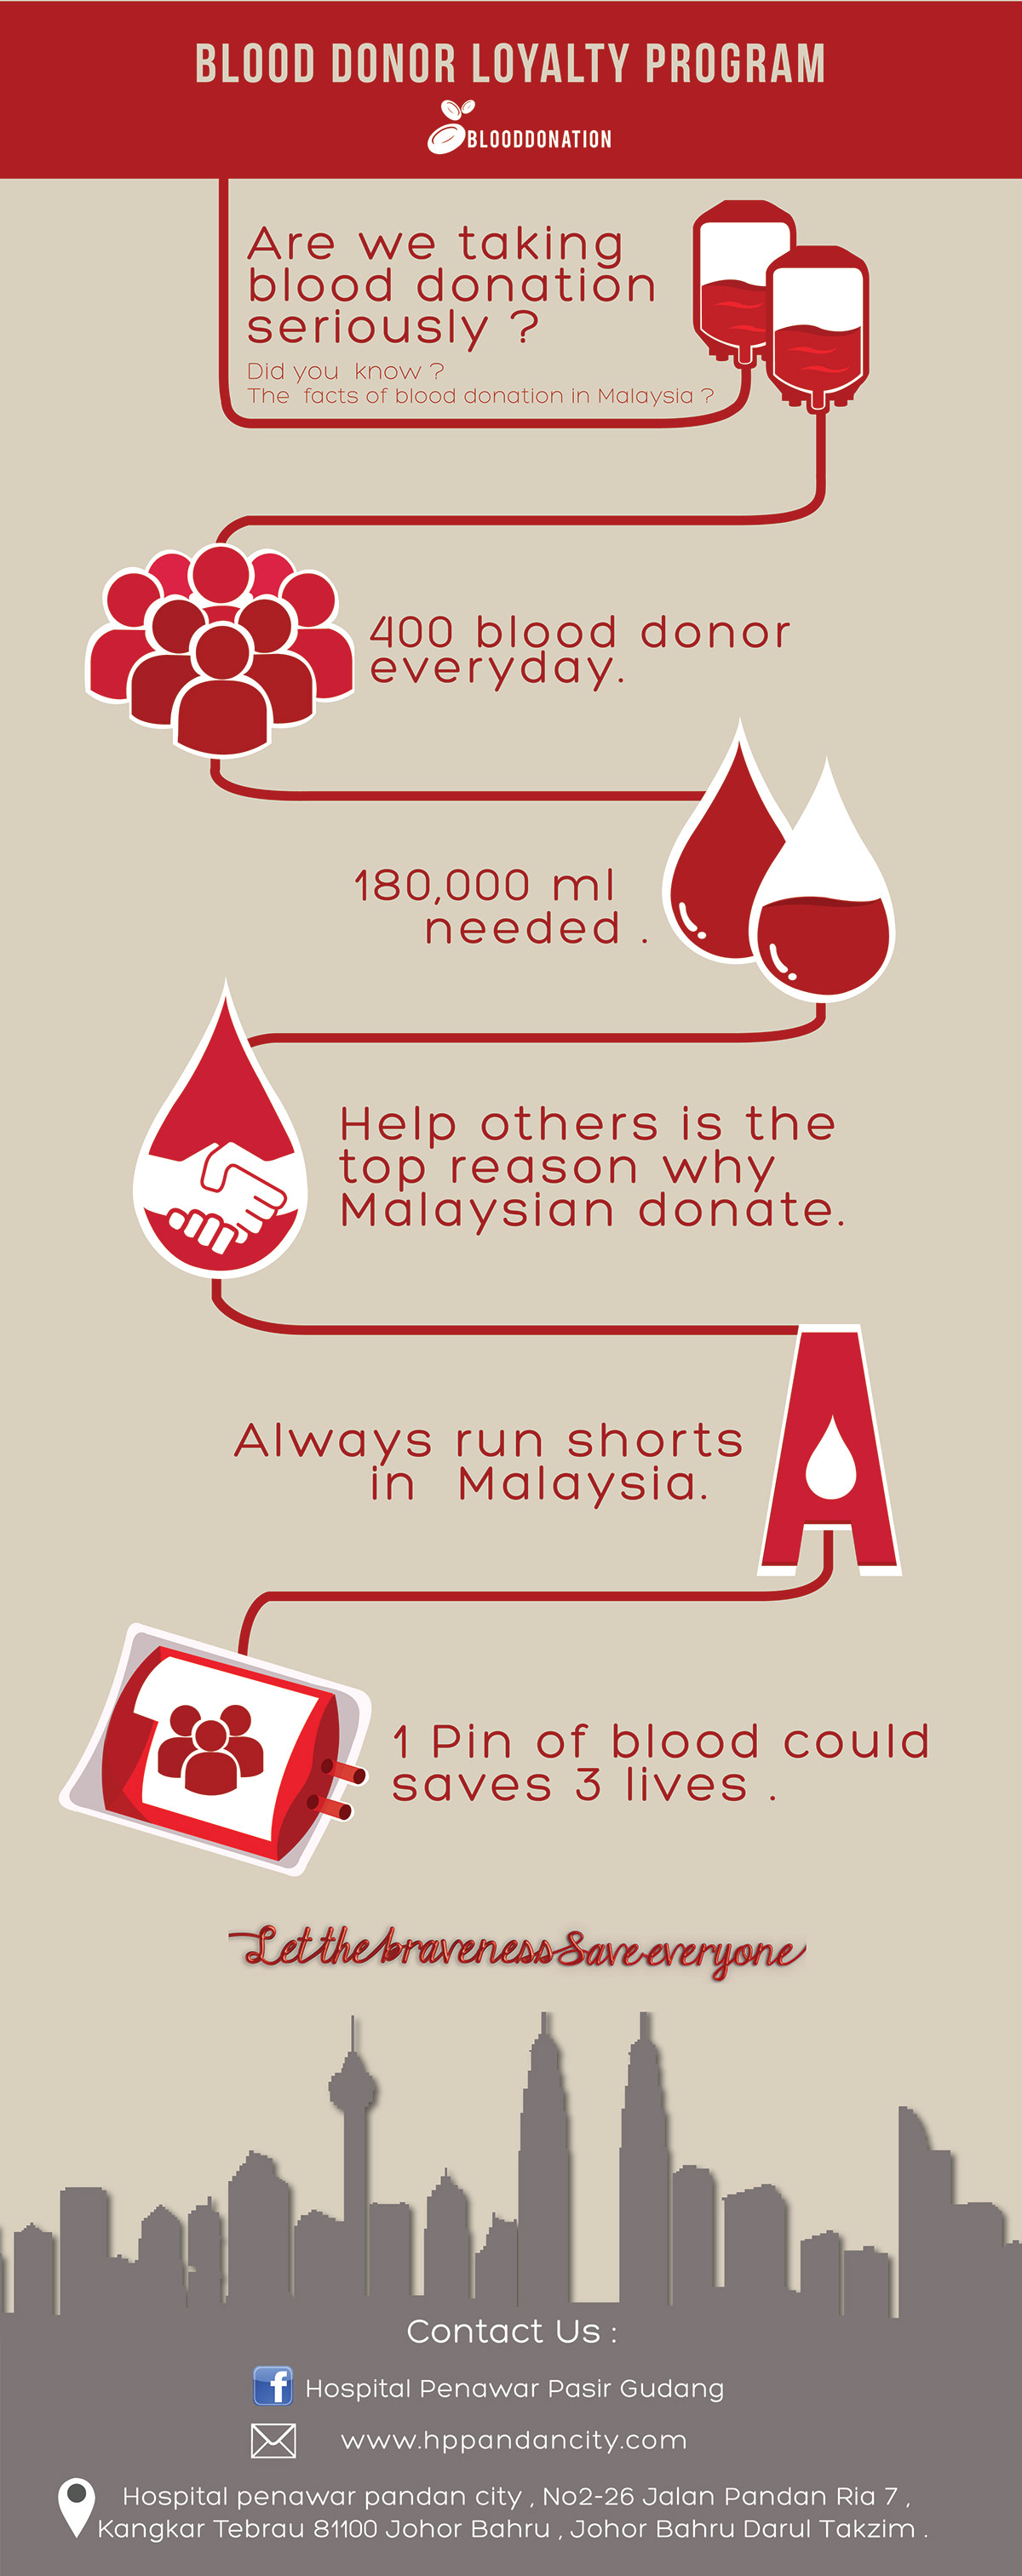 Donation malaysia plasma